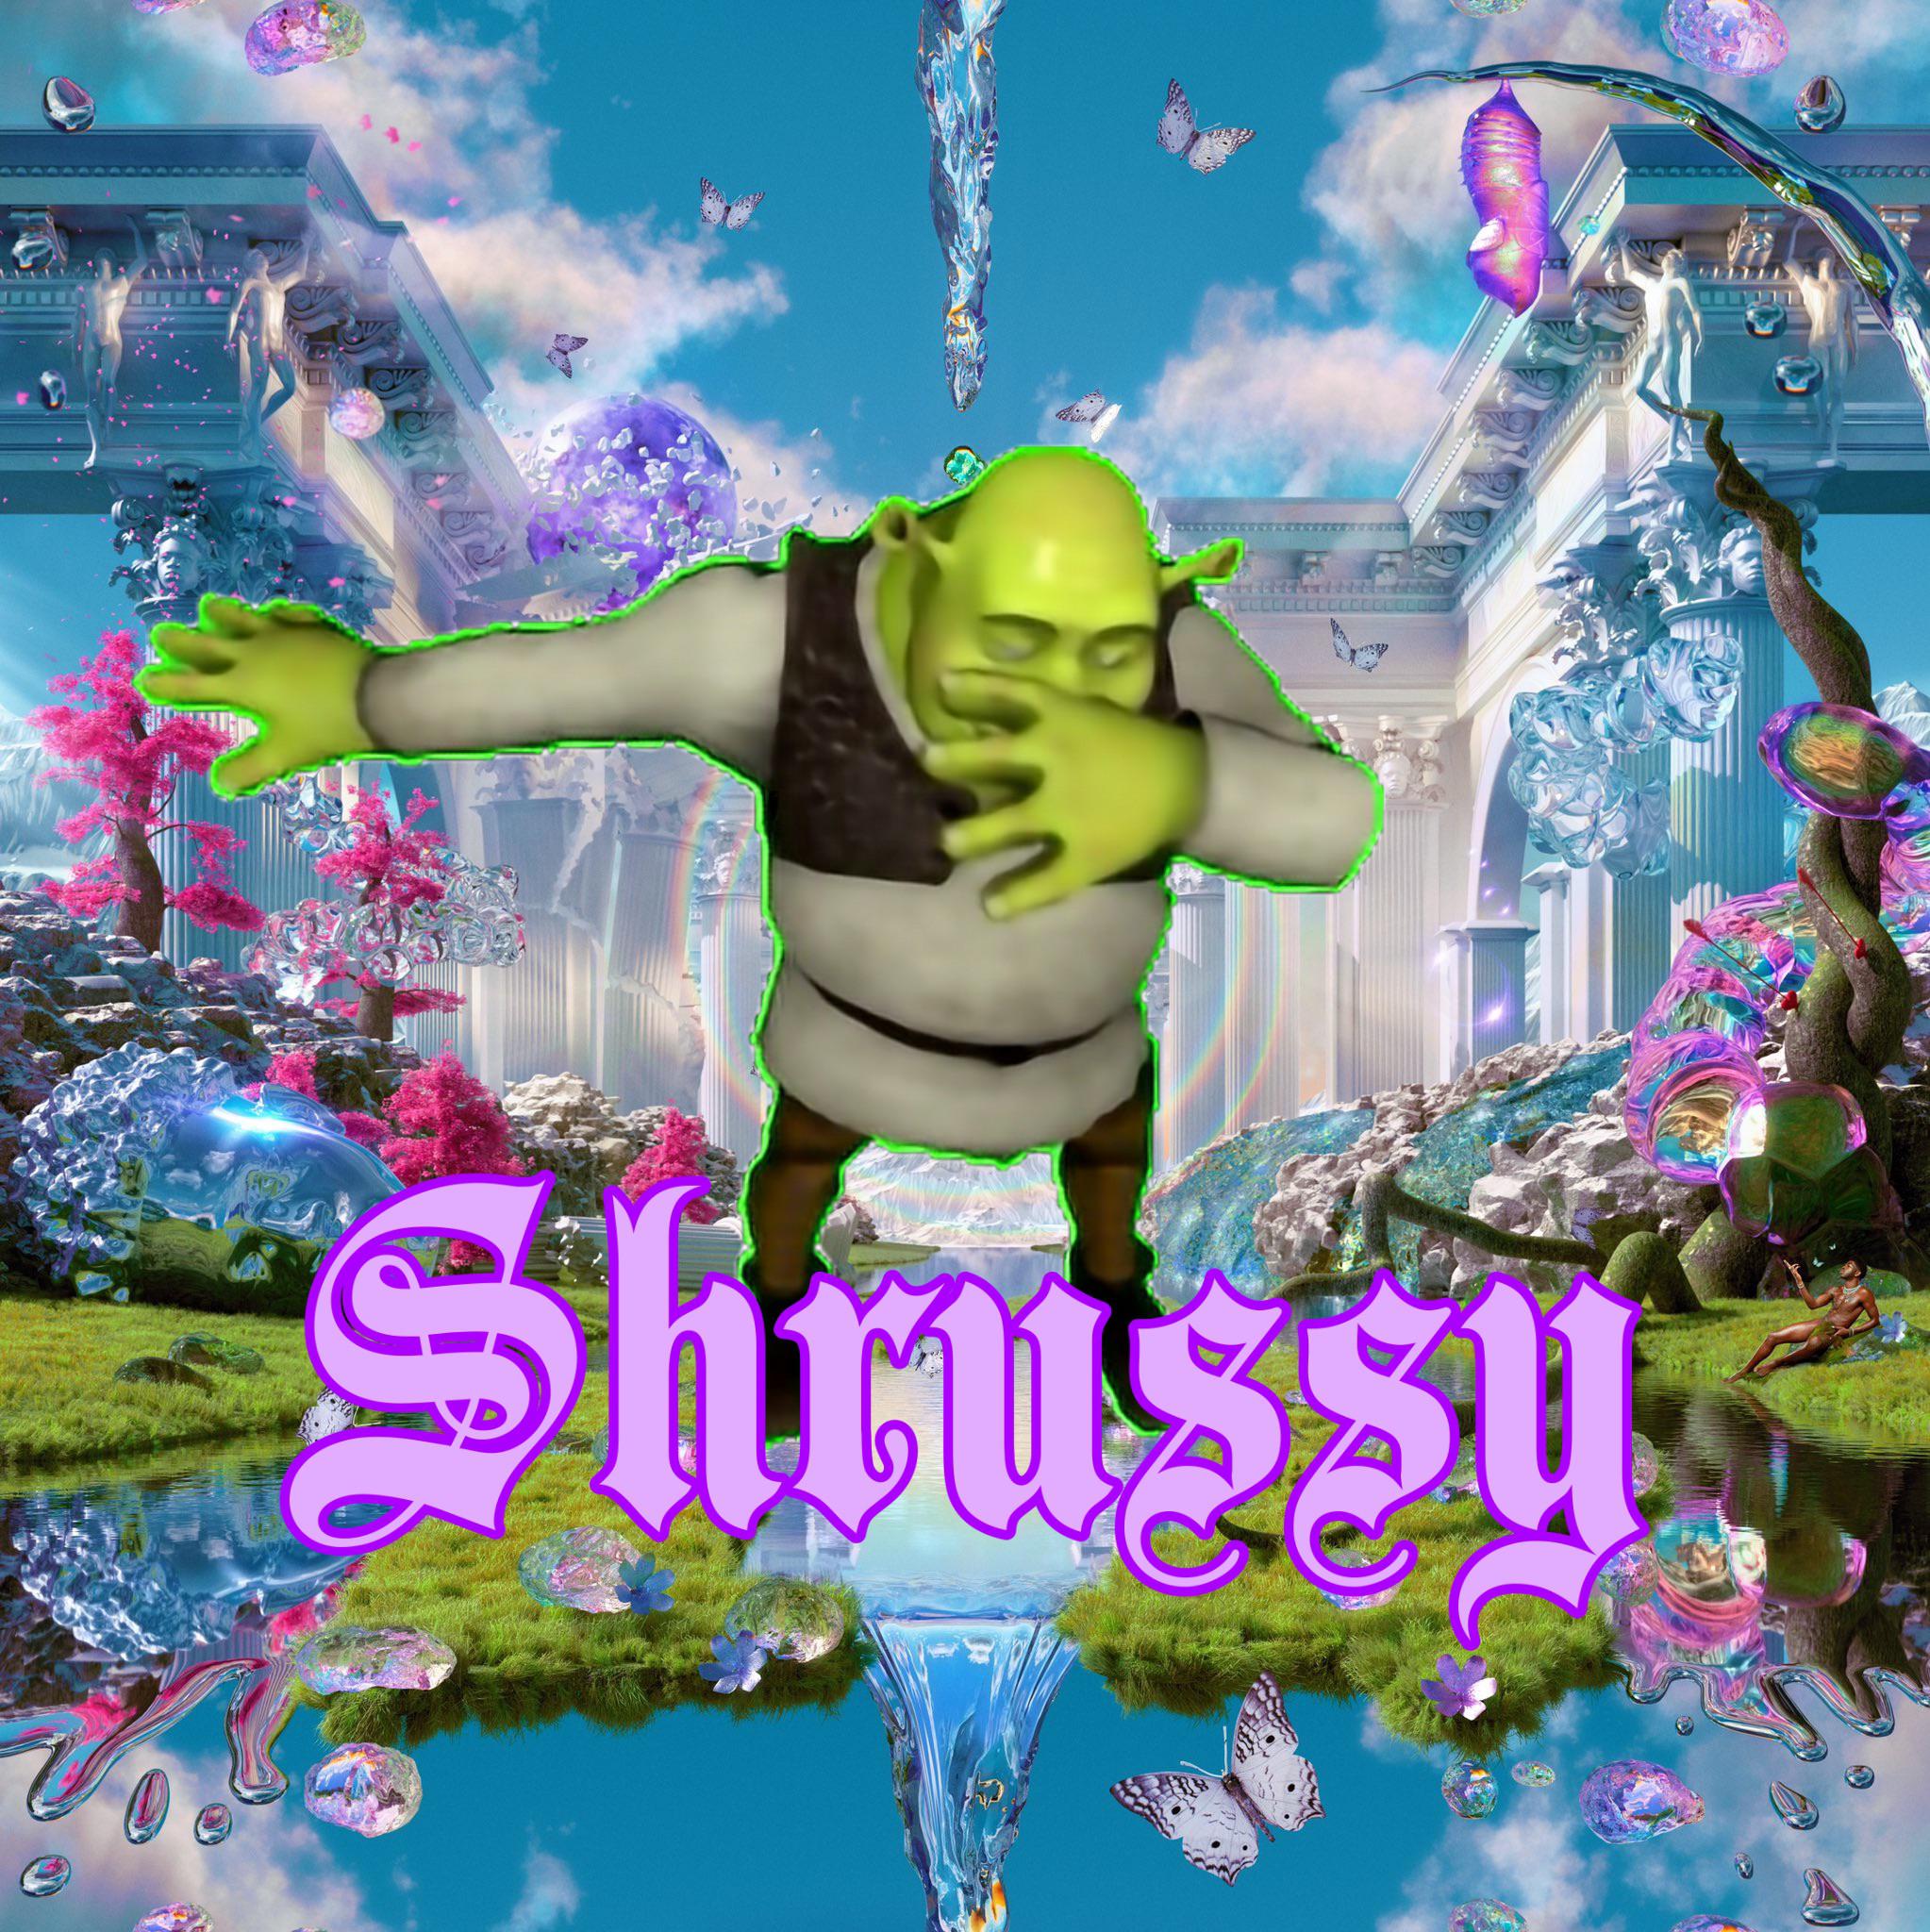 Shrek dancing in a fantasy world with the word Shmuzzy in purple - Shrek